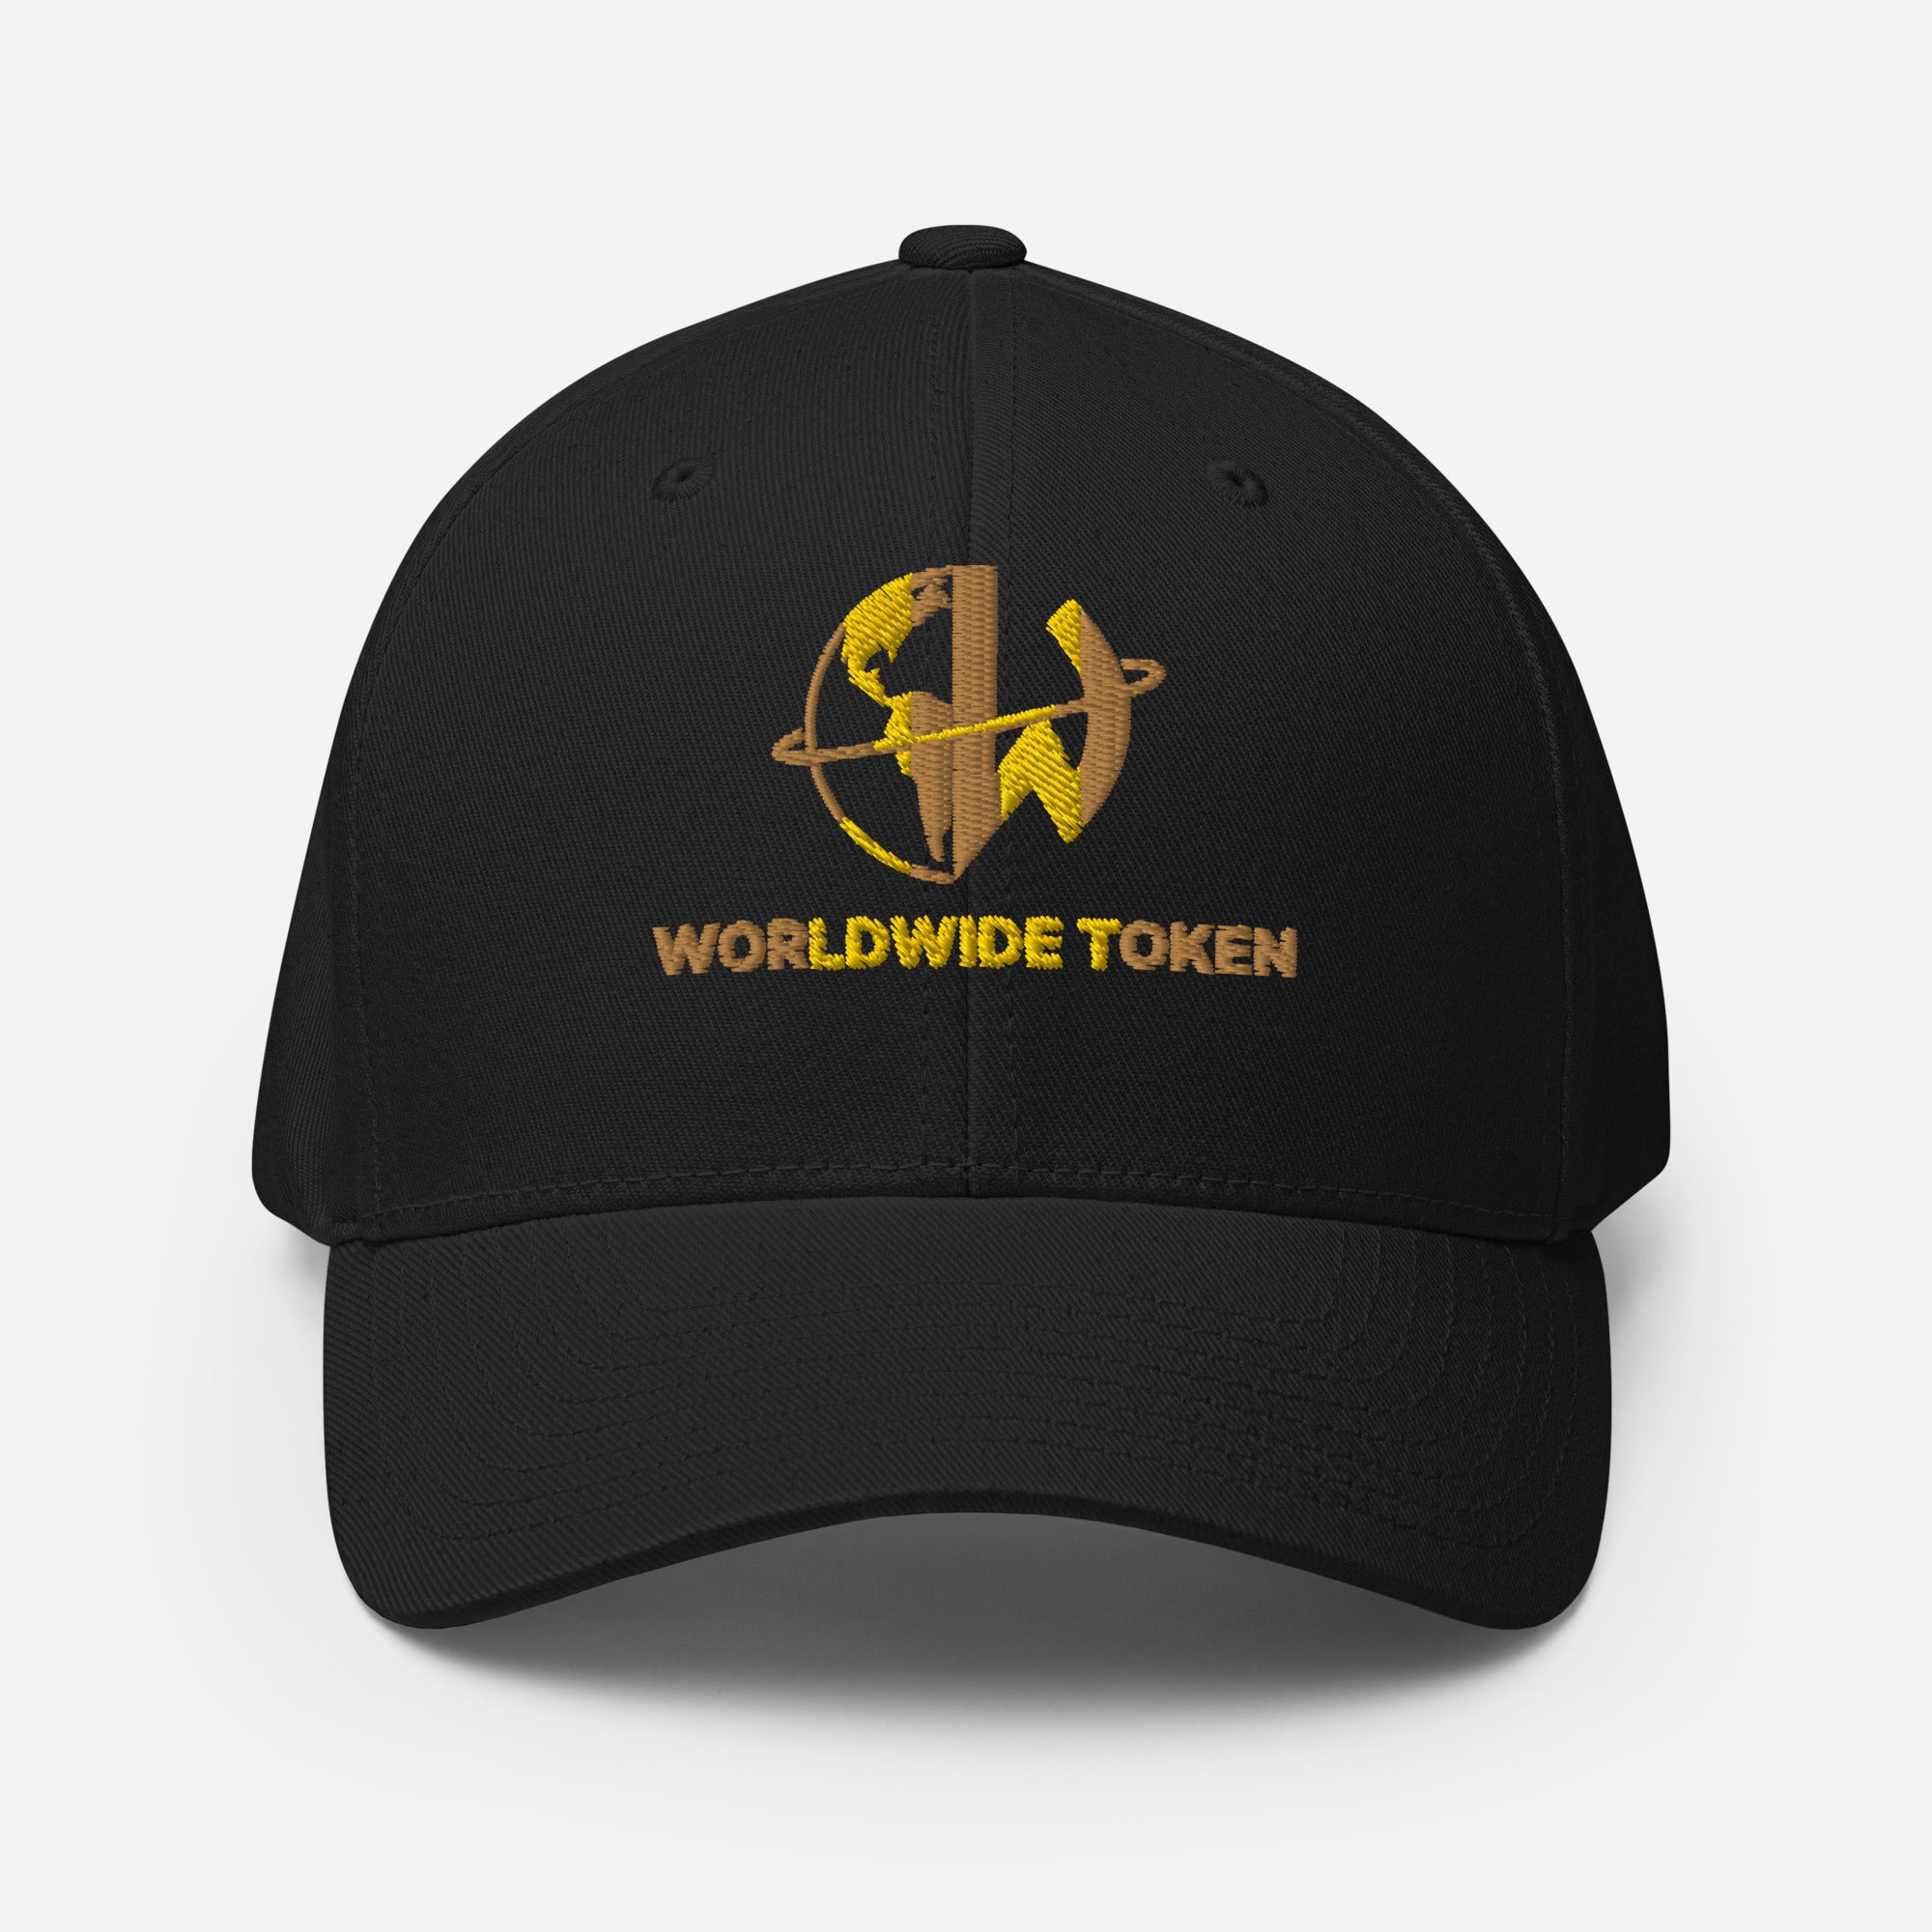 The Worldwide Token Structured Twill Cap